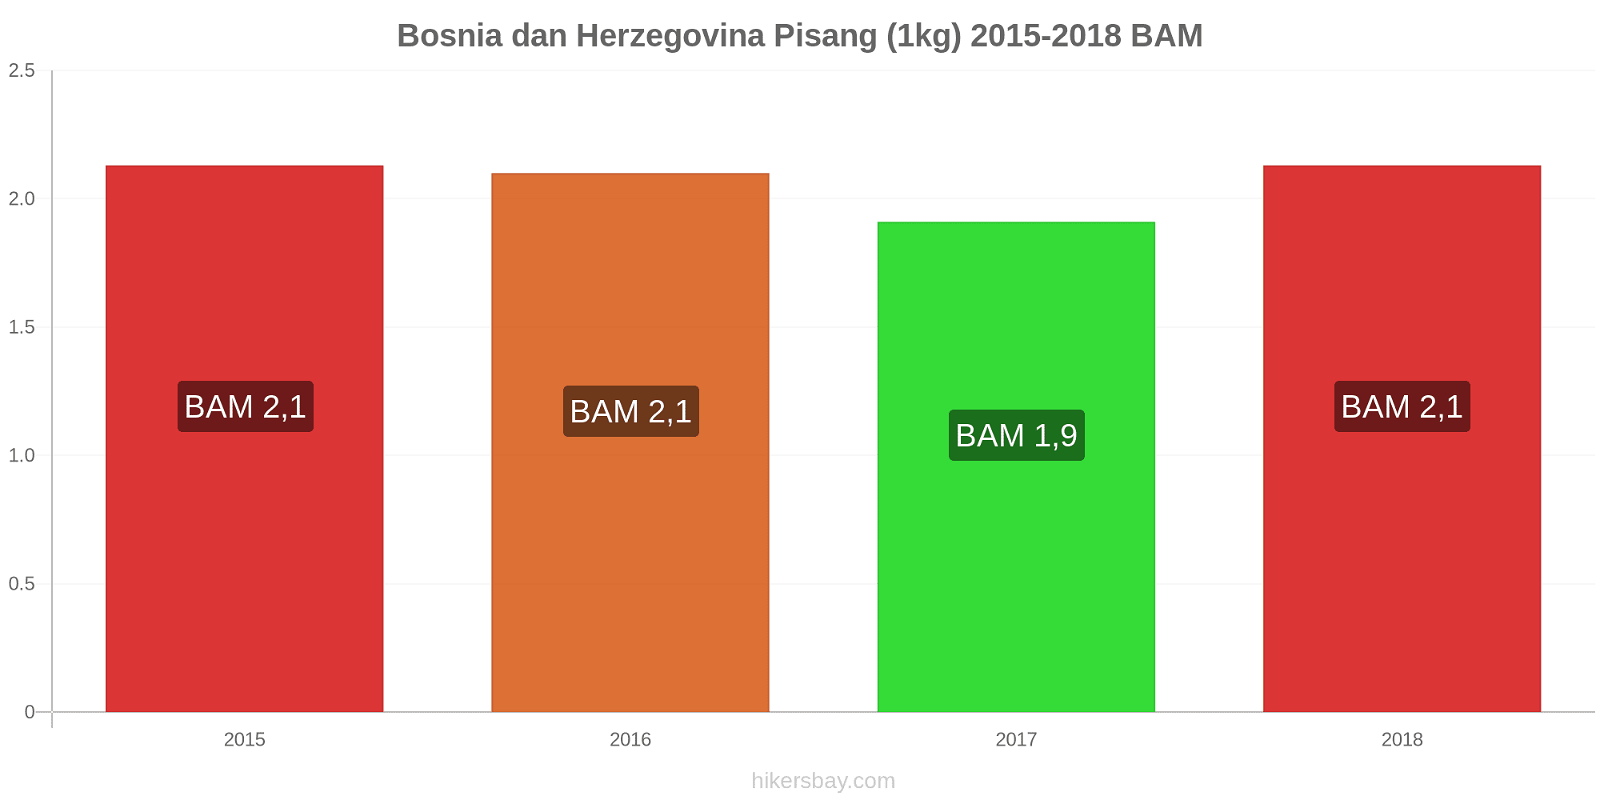 Bosnia dan Herzegovina perubahan harga Pisang (1kg) hikersbay.com